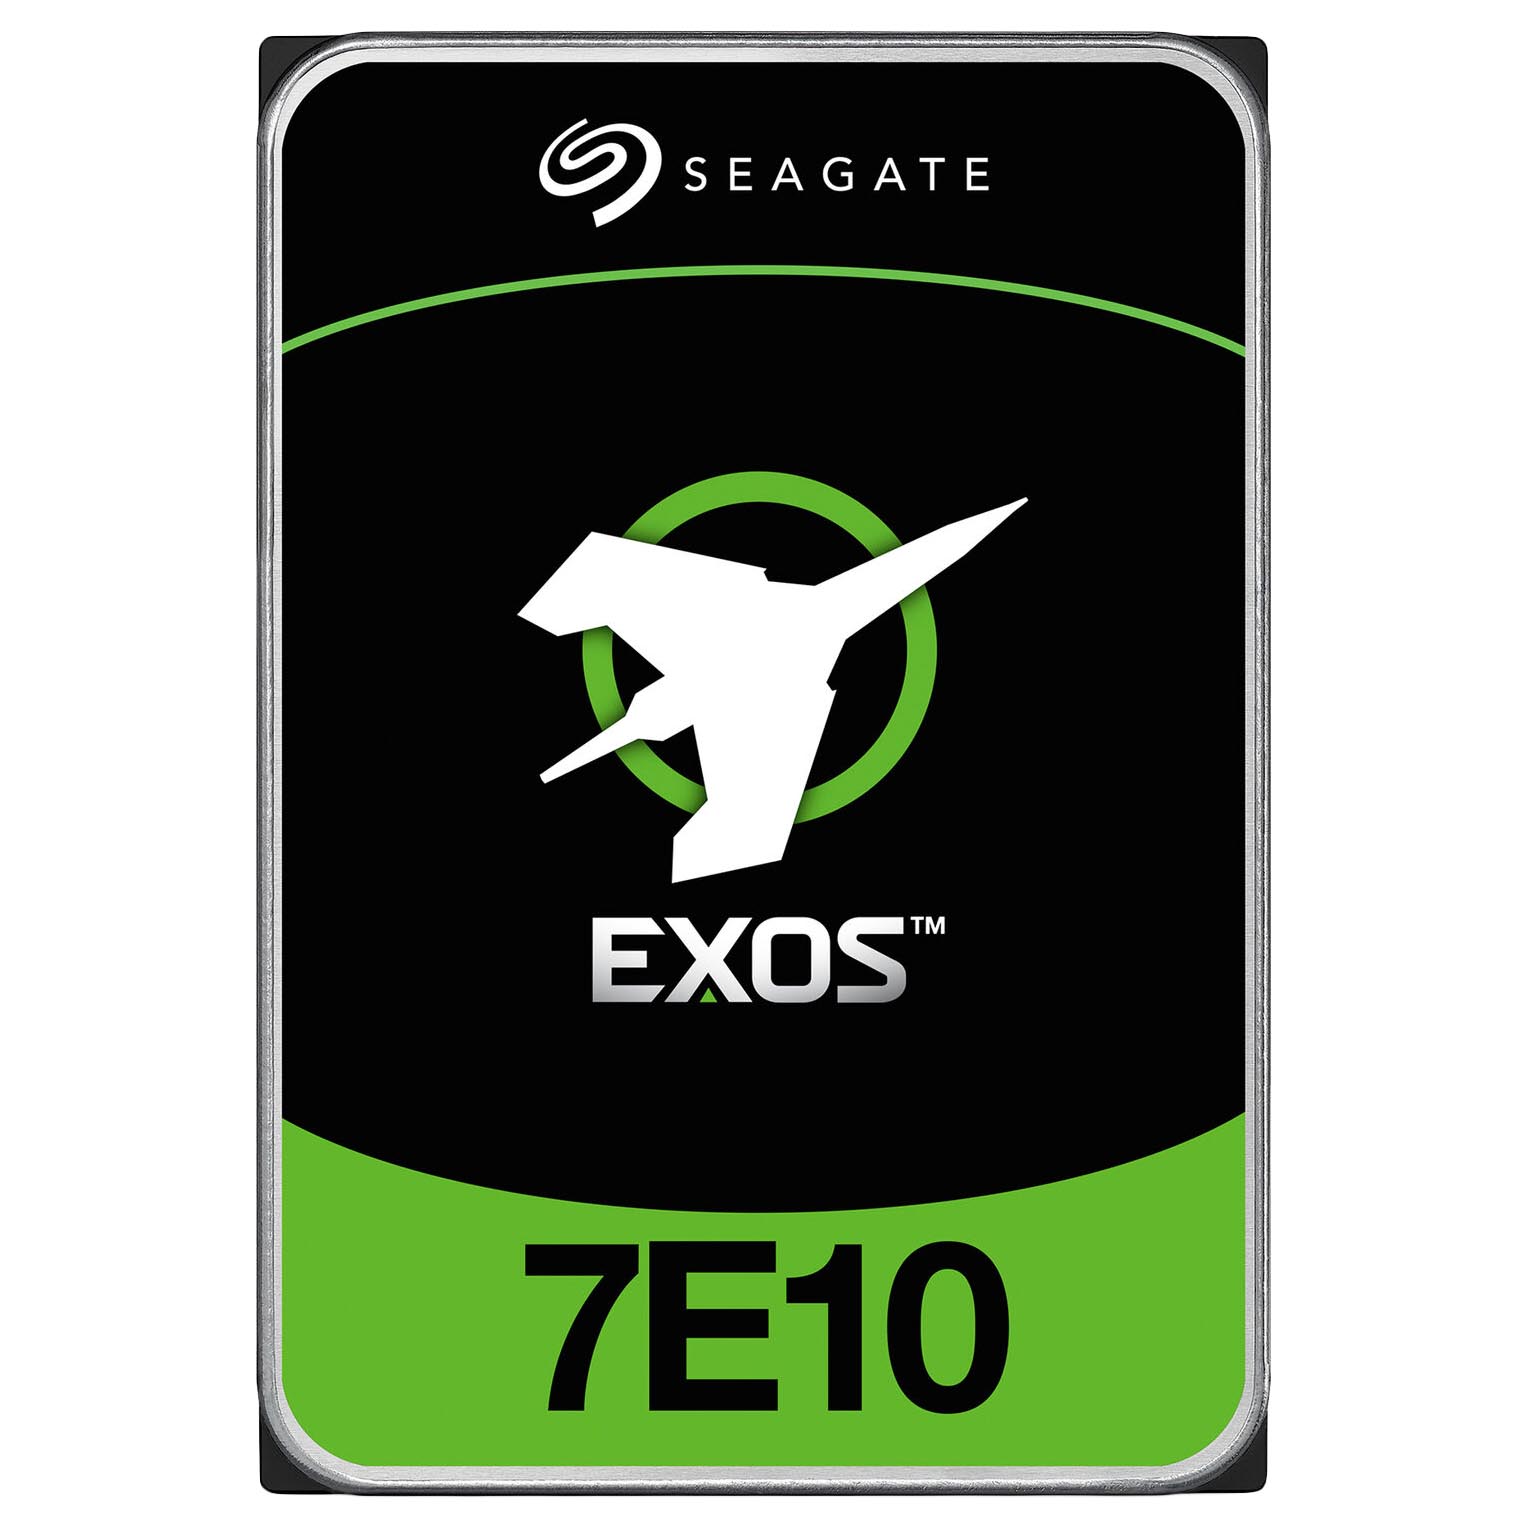 Внутренний жесткий диск Seagate Exos 7E10, ST2000NM001B, 2 Тб жесткий диск seagate exos 4tb st4000nm000a